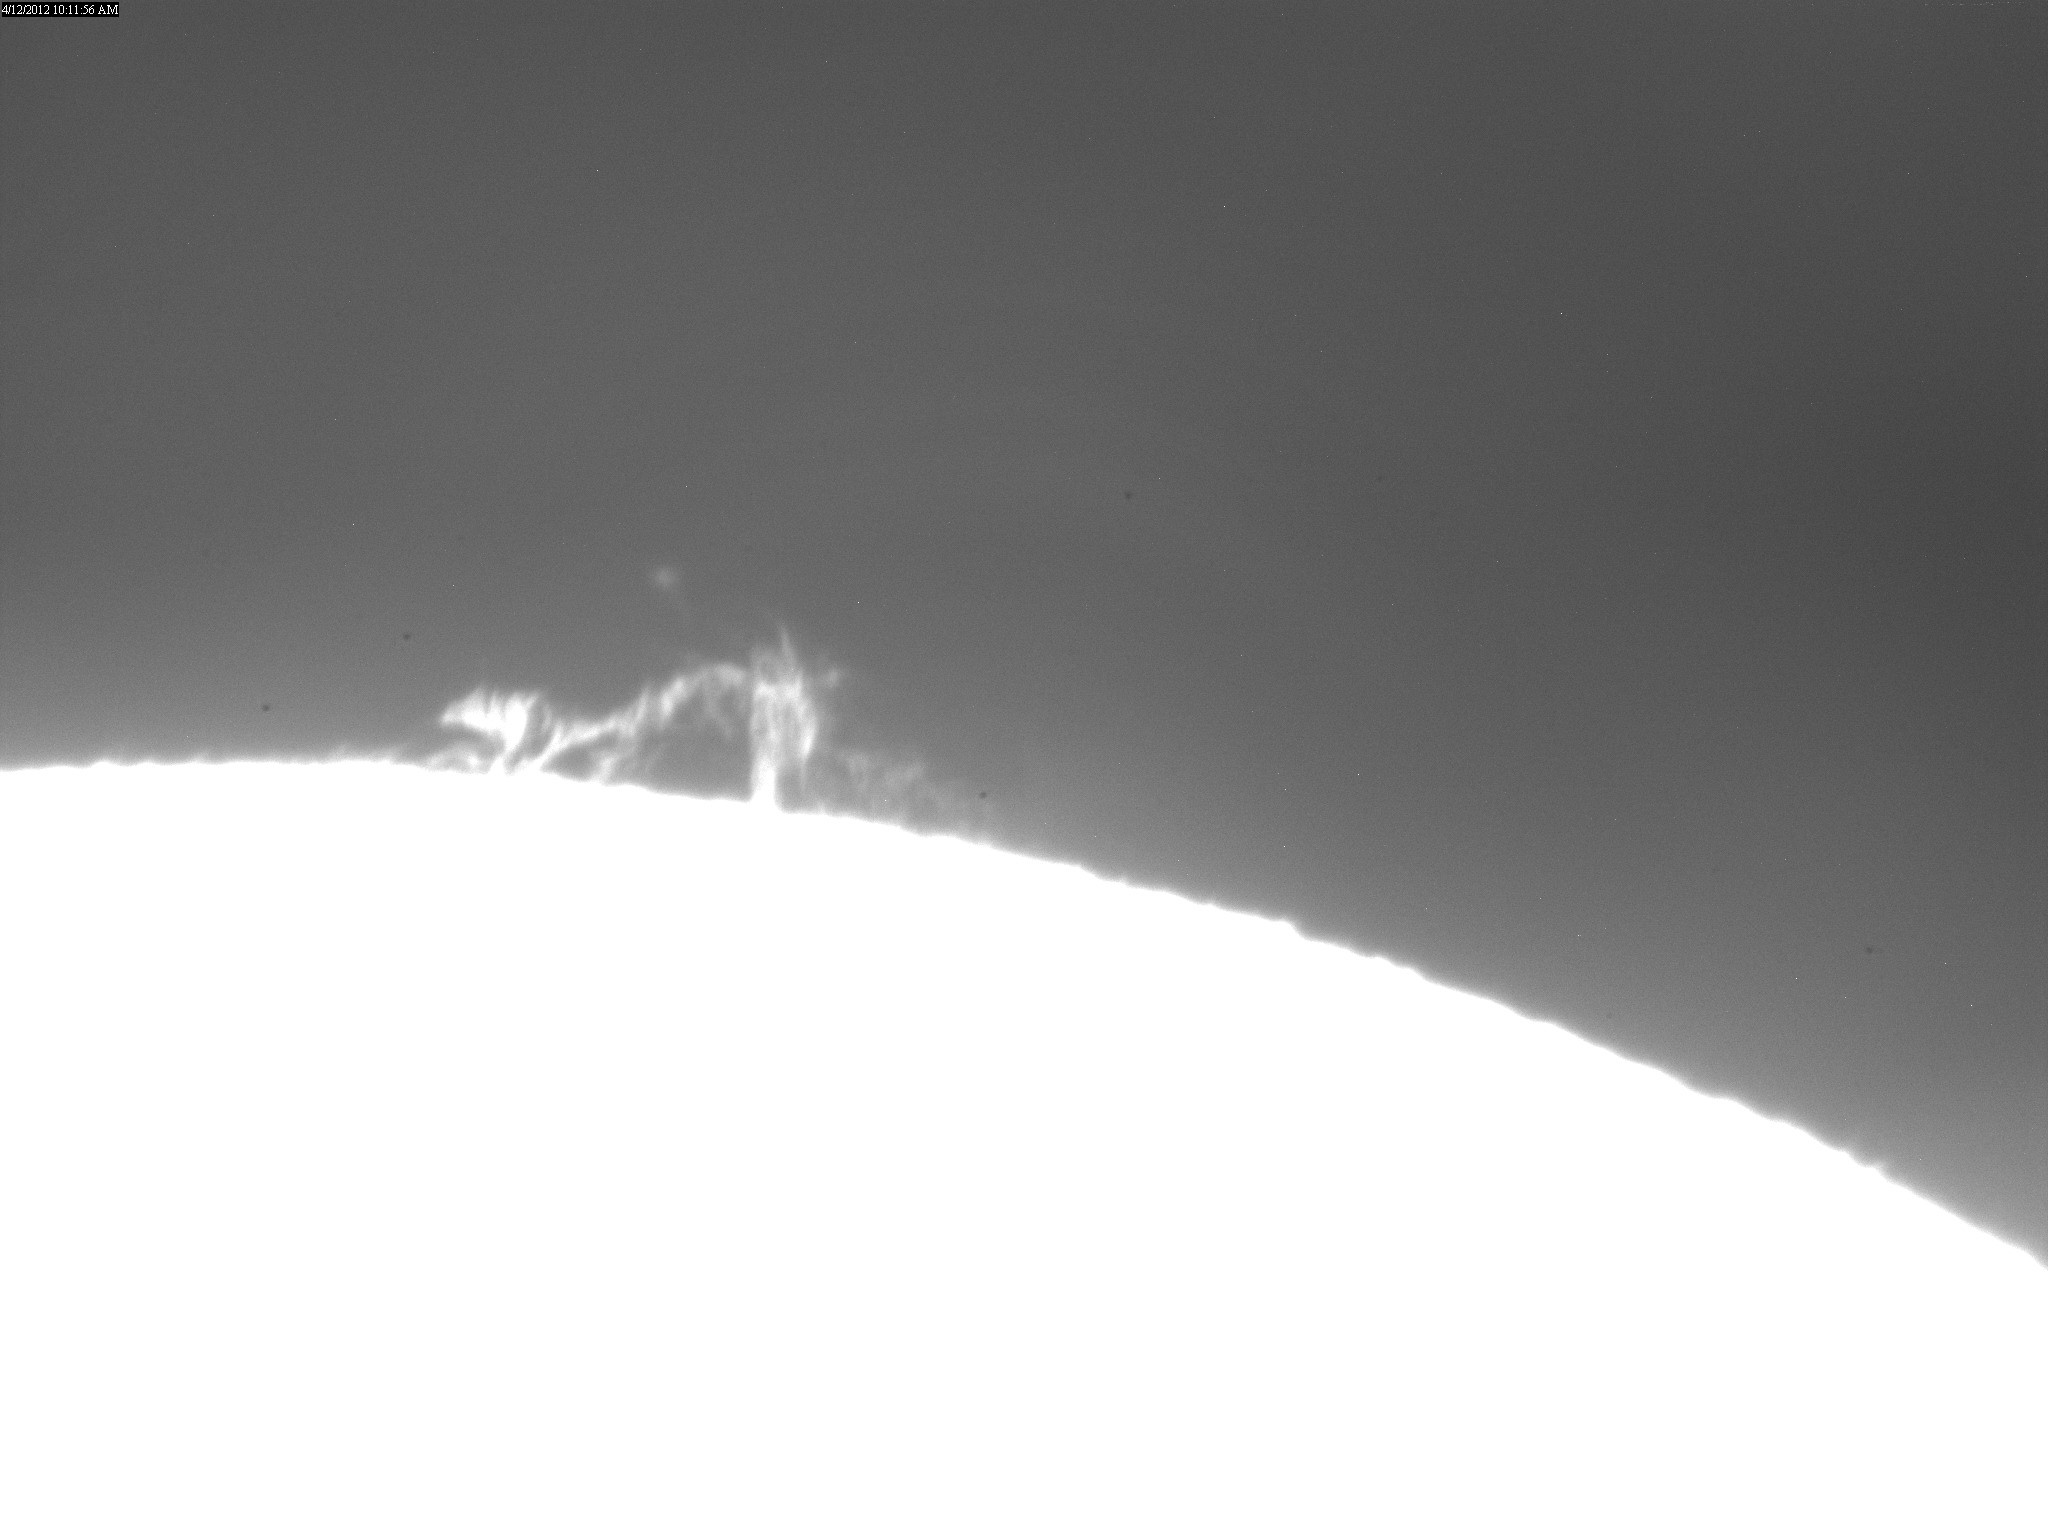 2012 Apr 12 Sun - prominence on the north limb